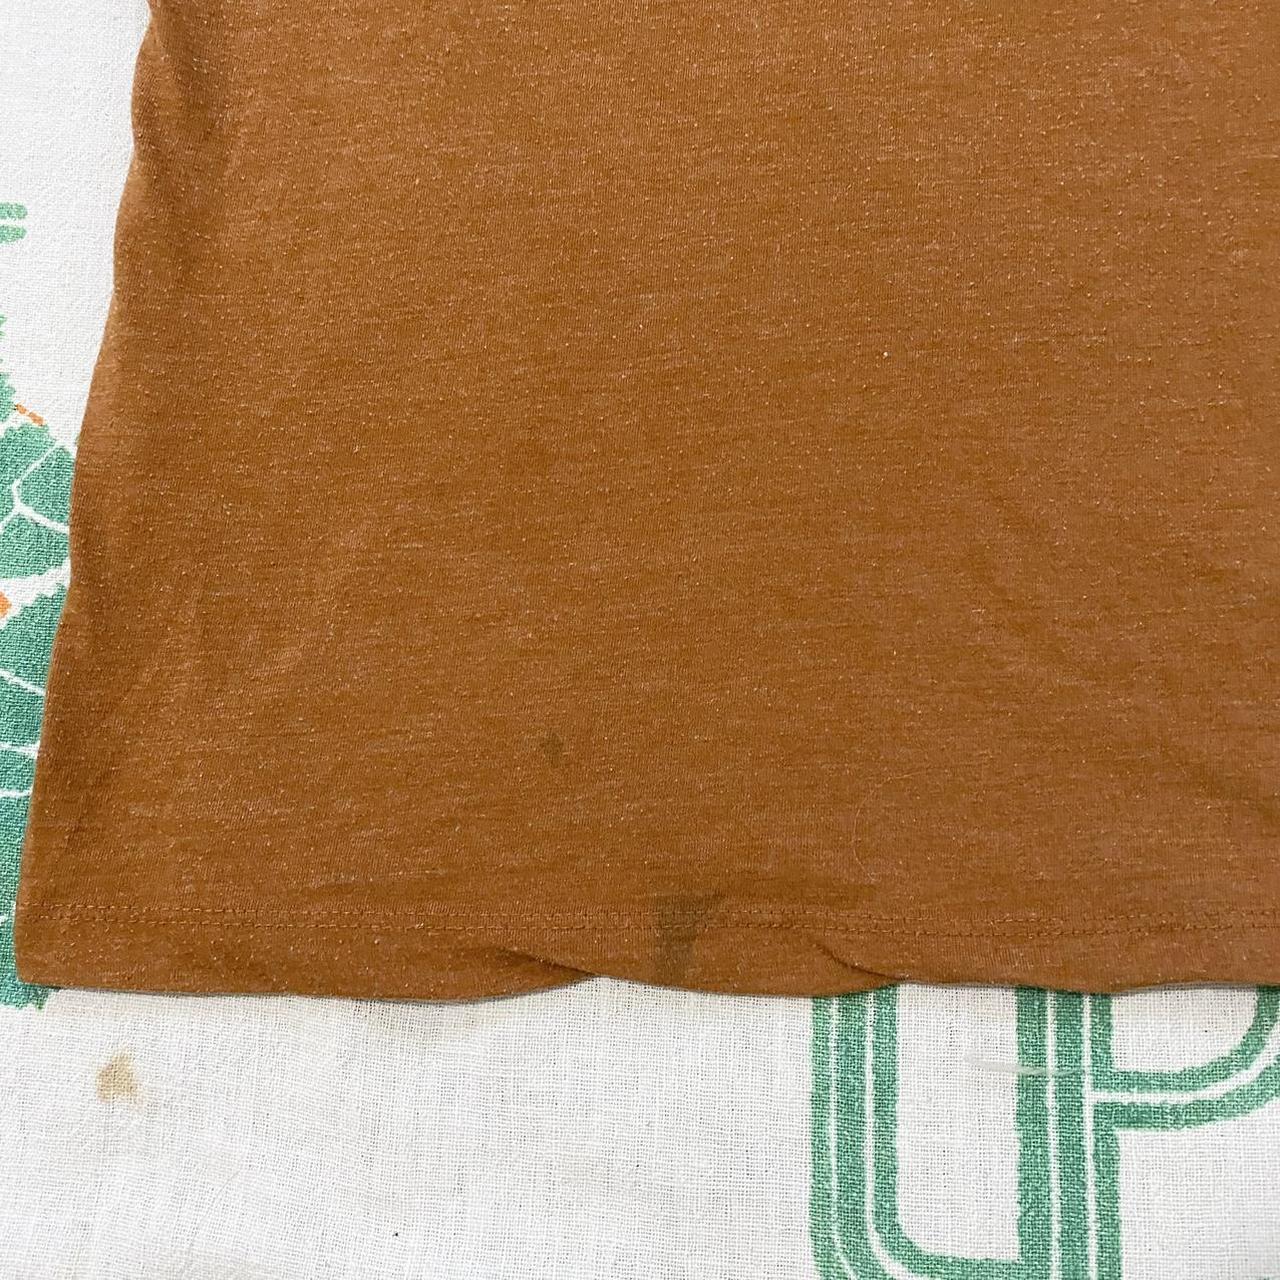 Utility Men's Orange and Black T-shirt (4)